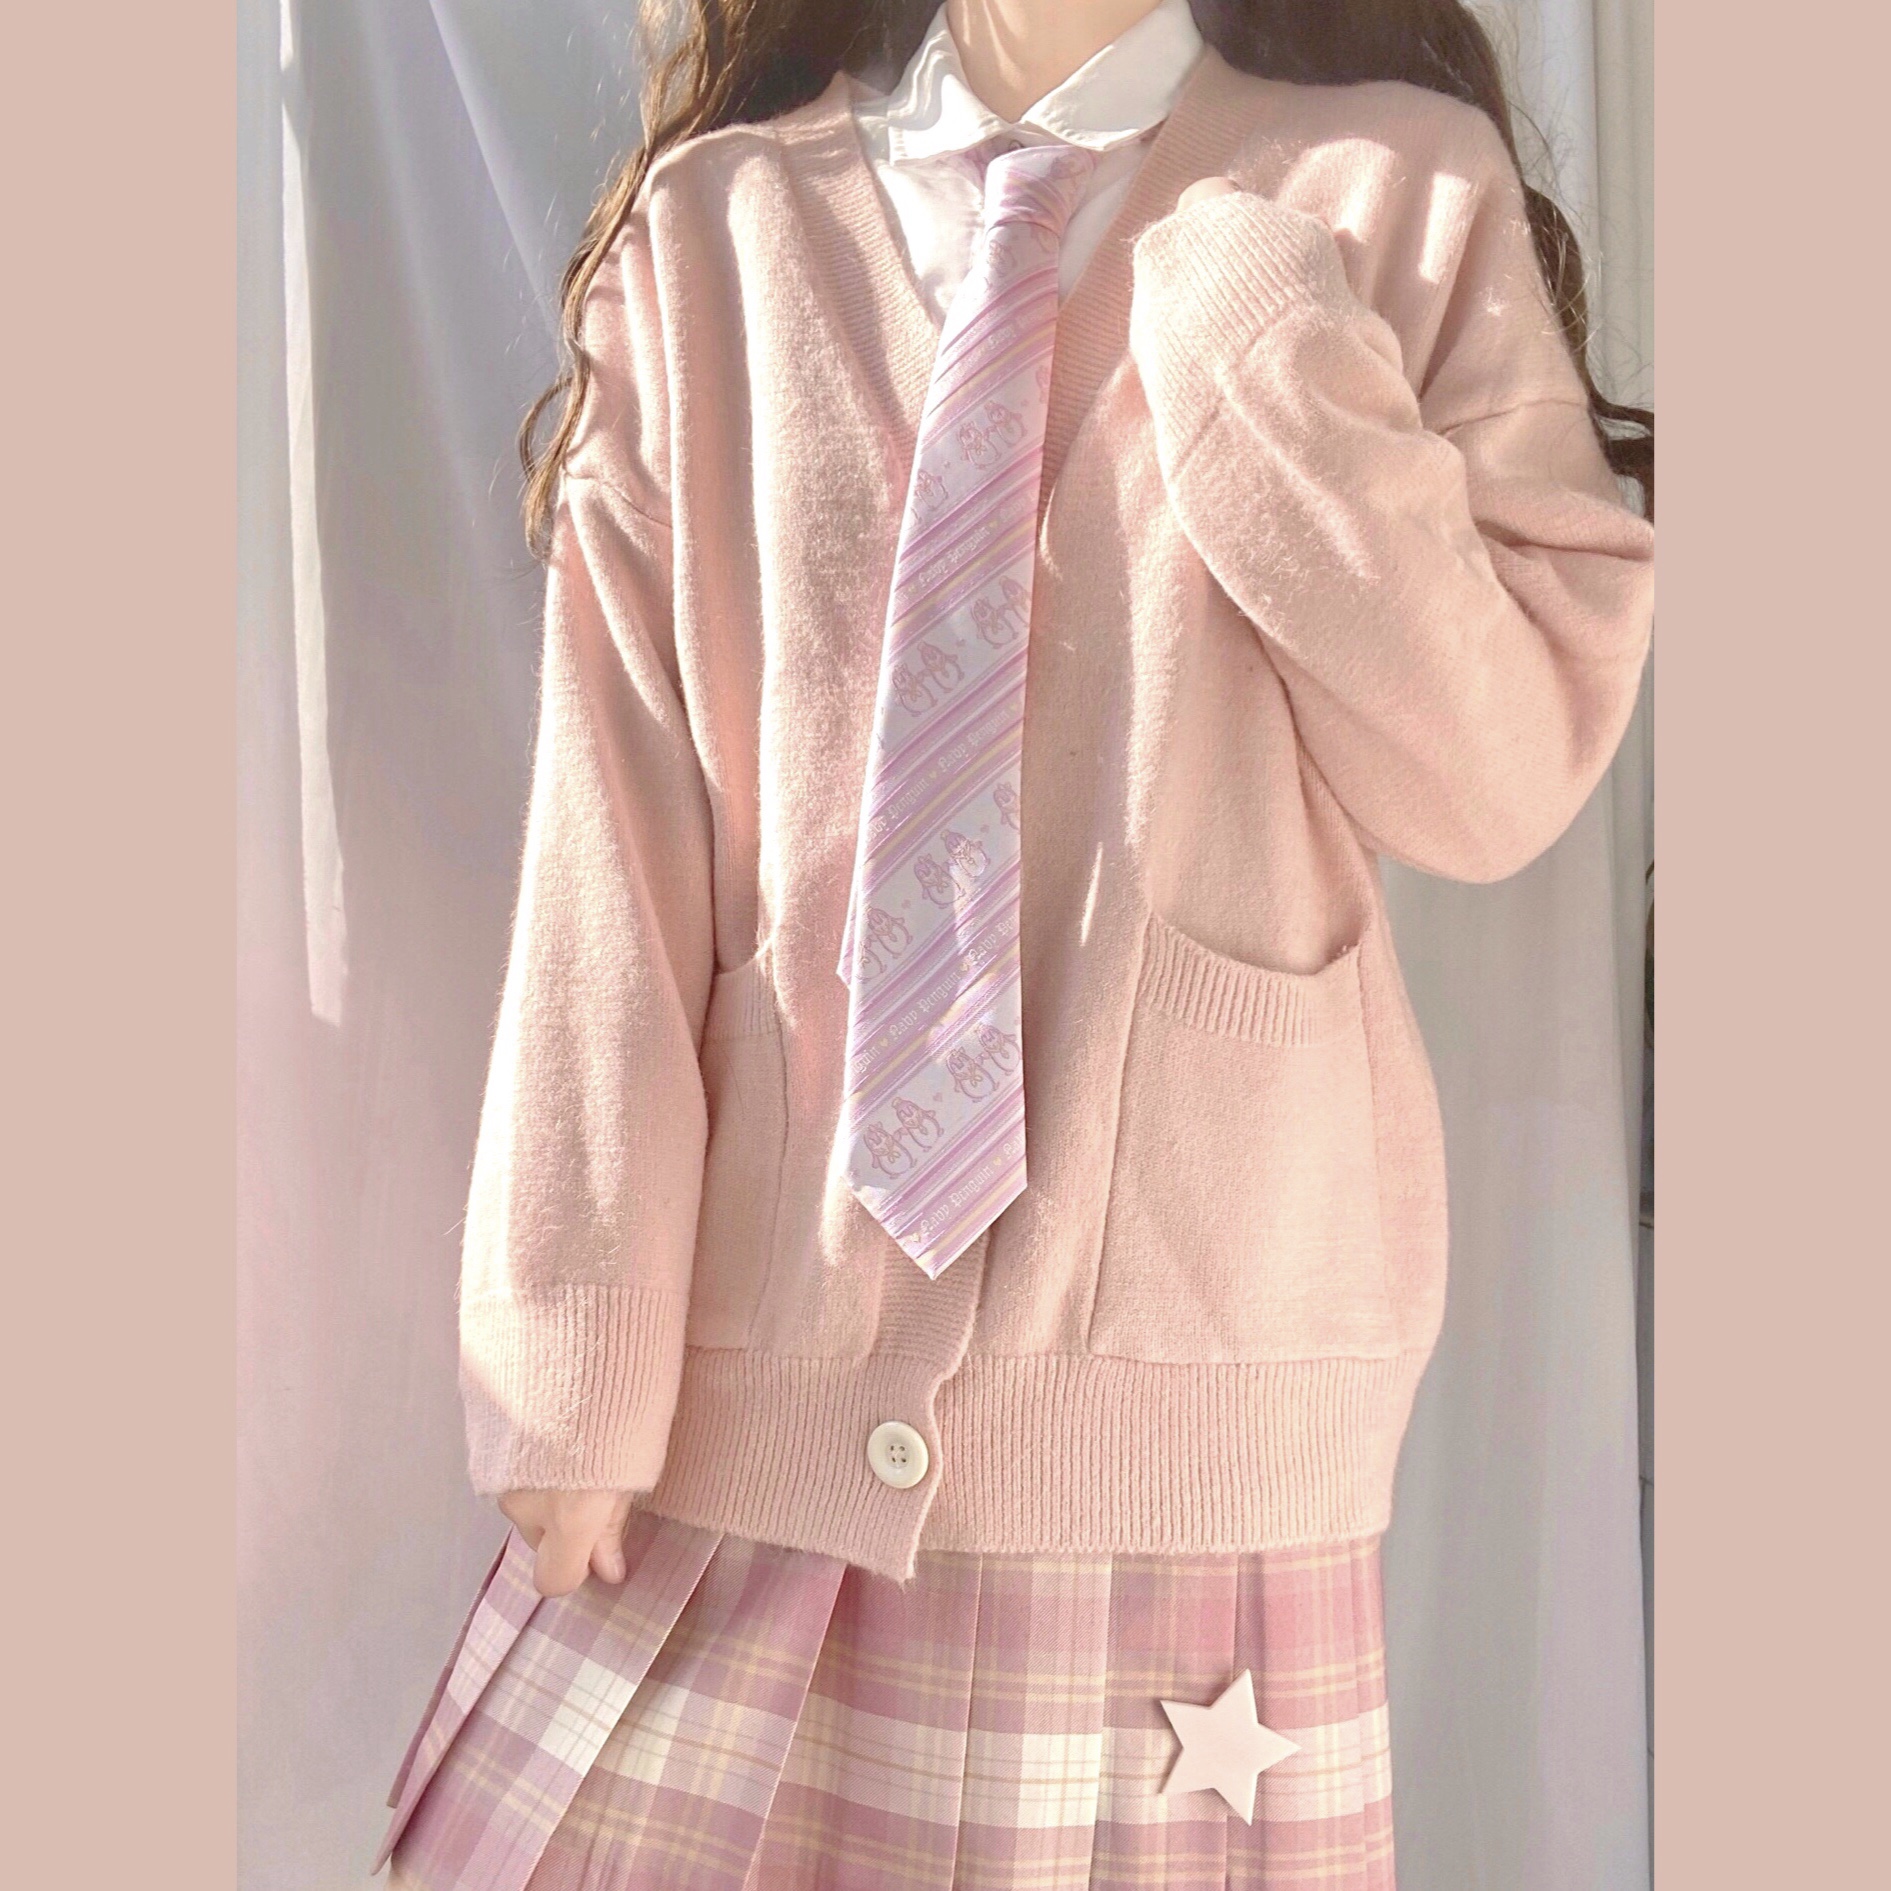 JK Cardigan Loose JK Sweater Coat japanese school uniform school girl uniform  japanese fashion  uniformes  estudiantes Image